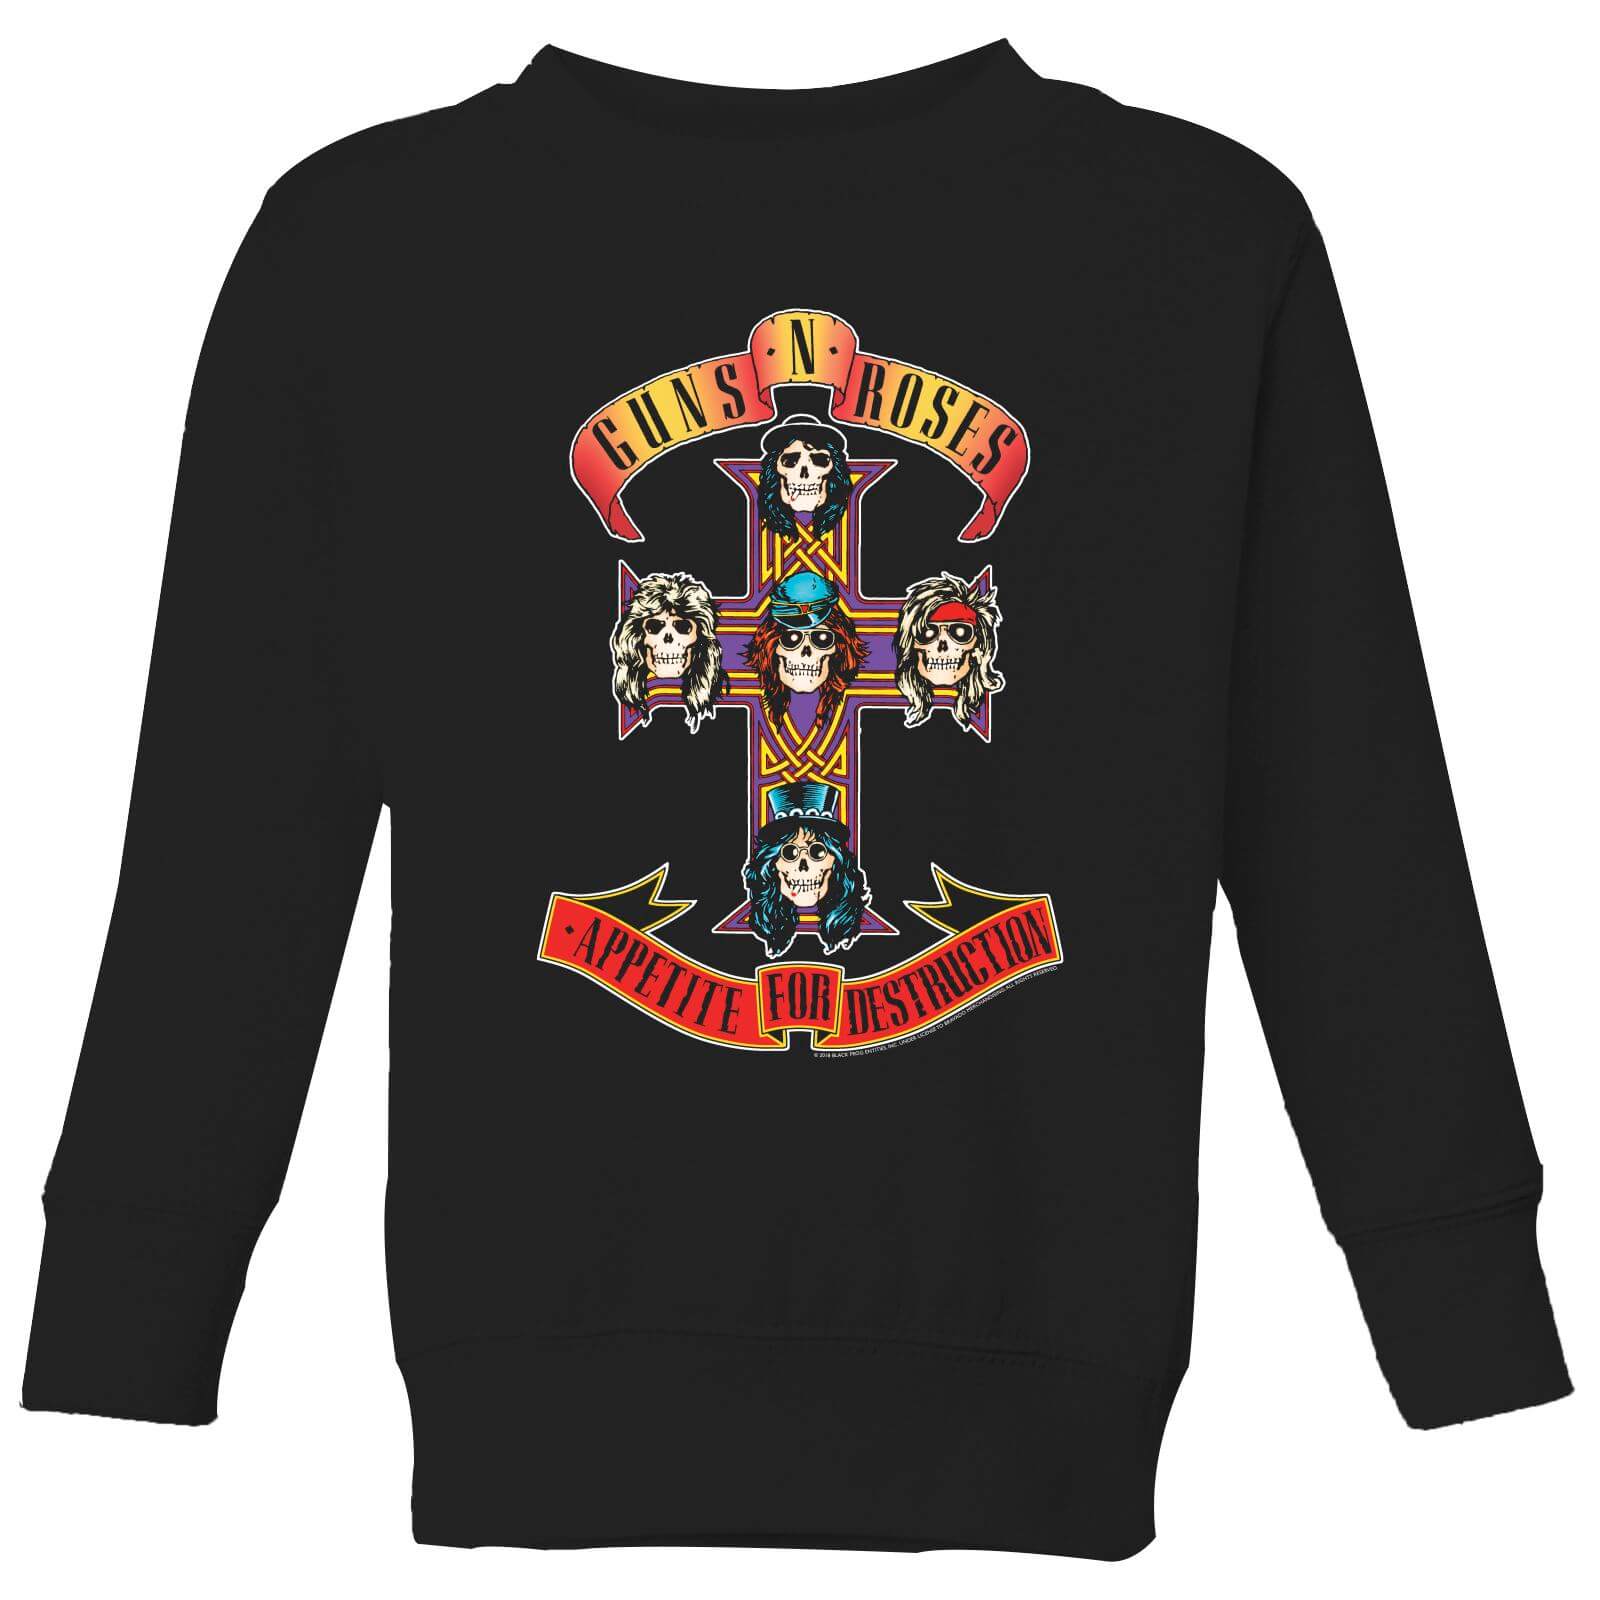 Guns N Roses Appetite For Destruction Kids' Sweatshirt - Black - 11-12 Years - Black